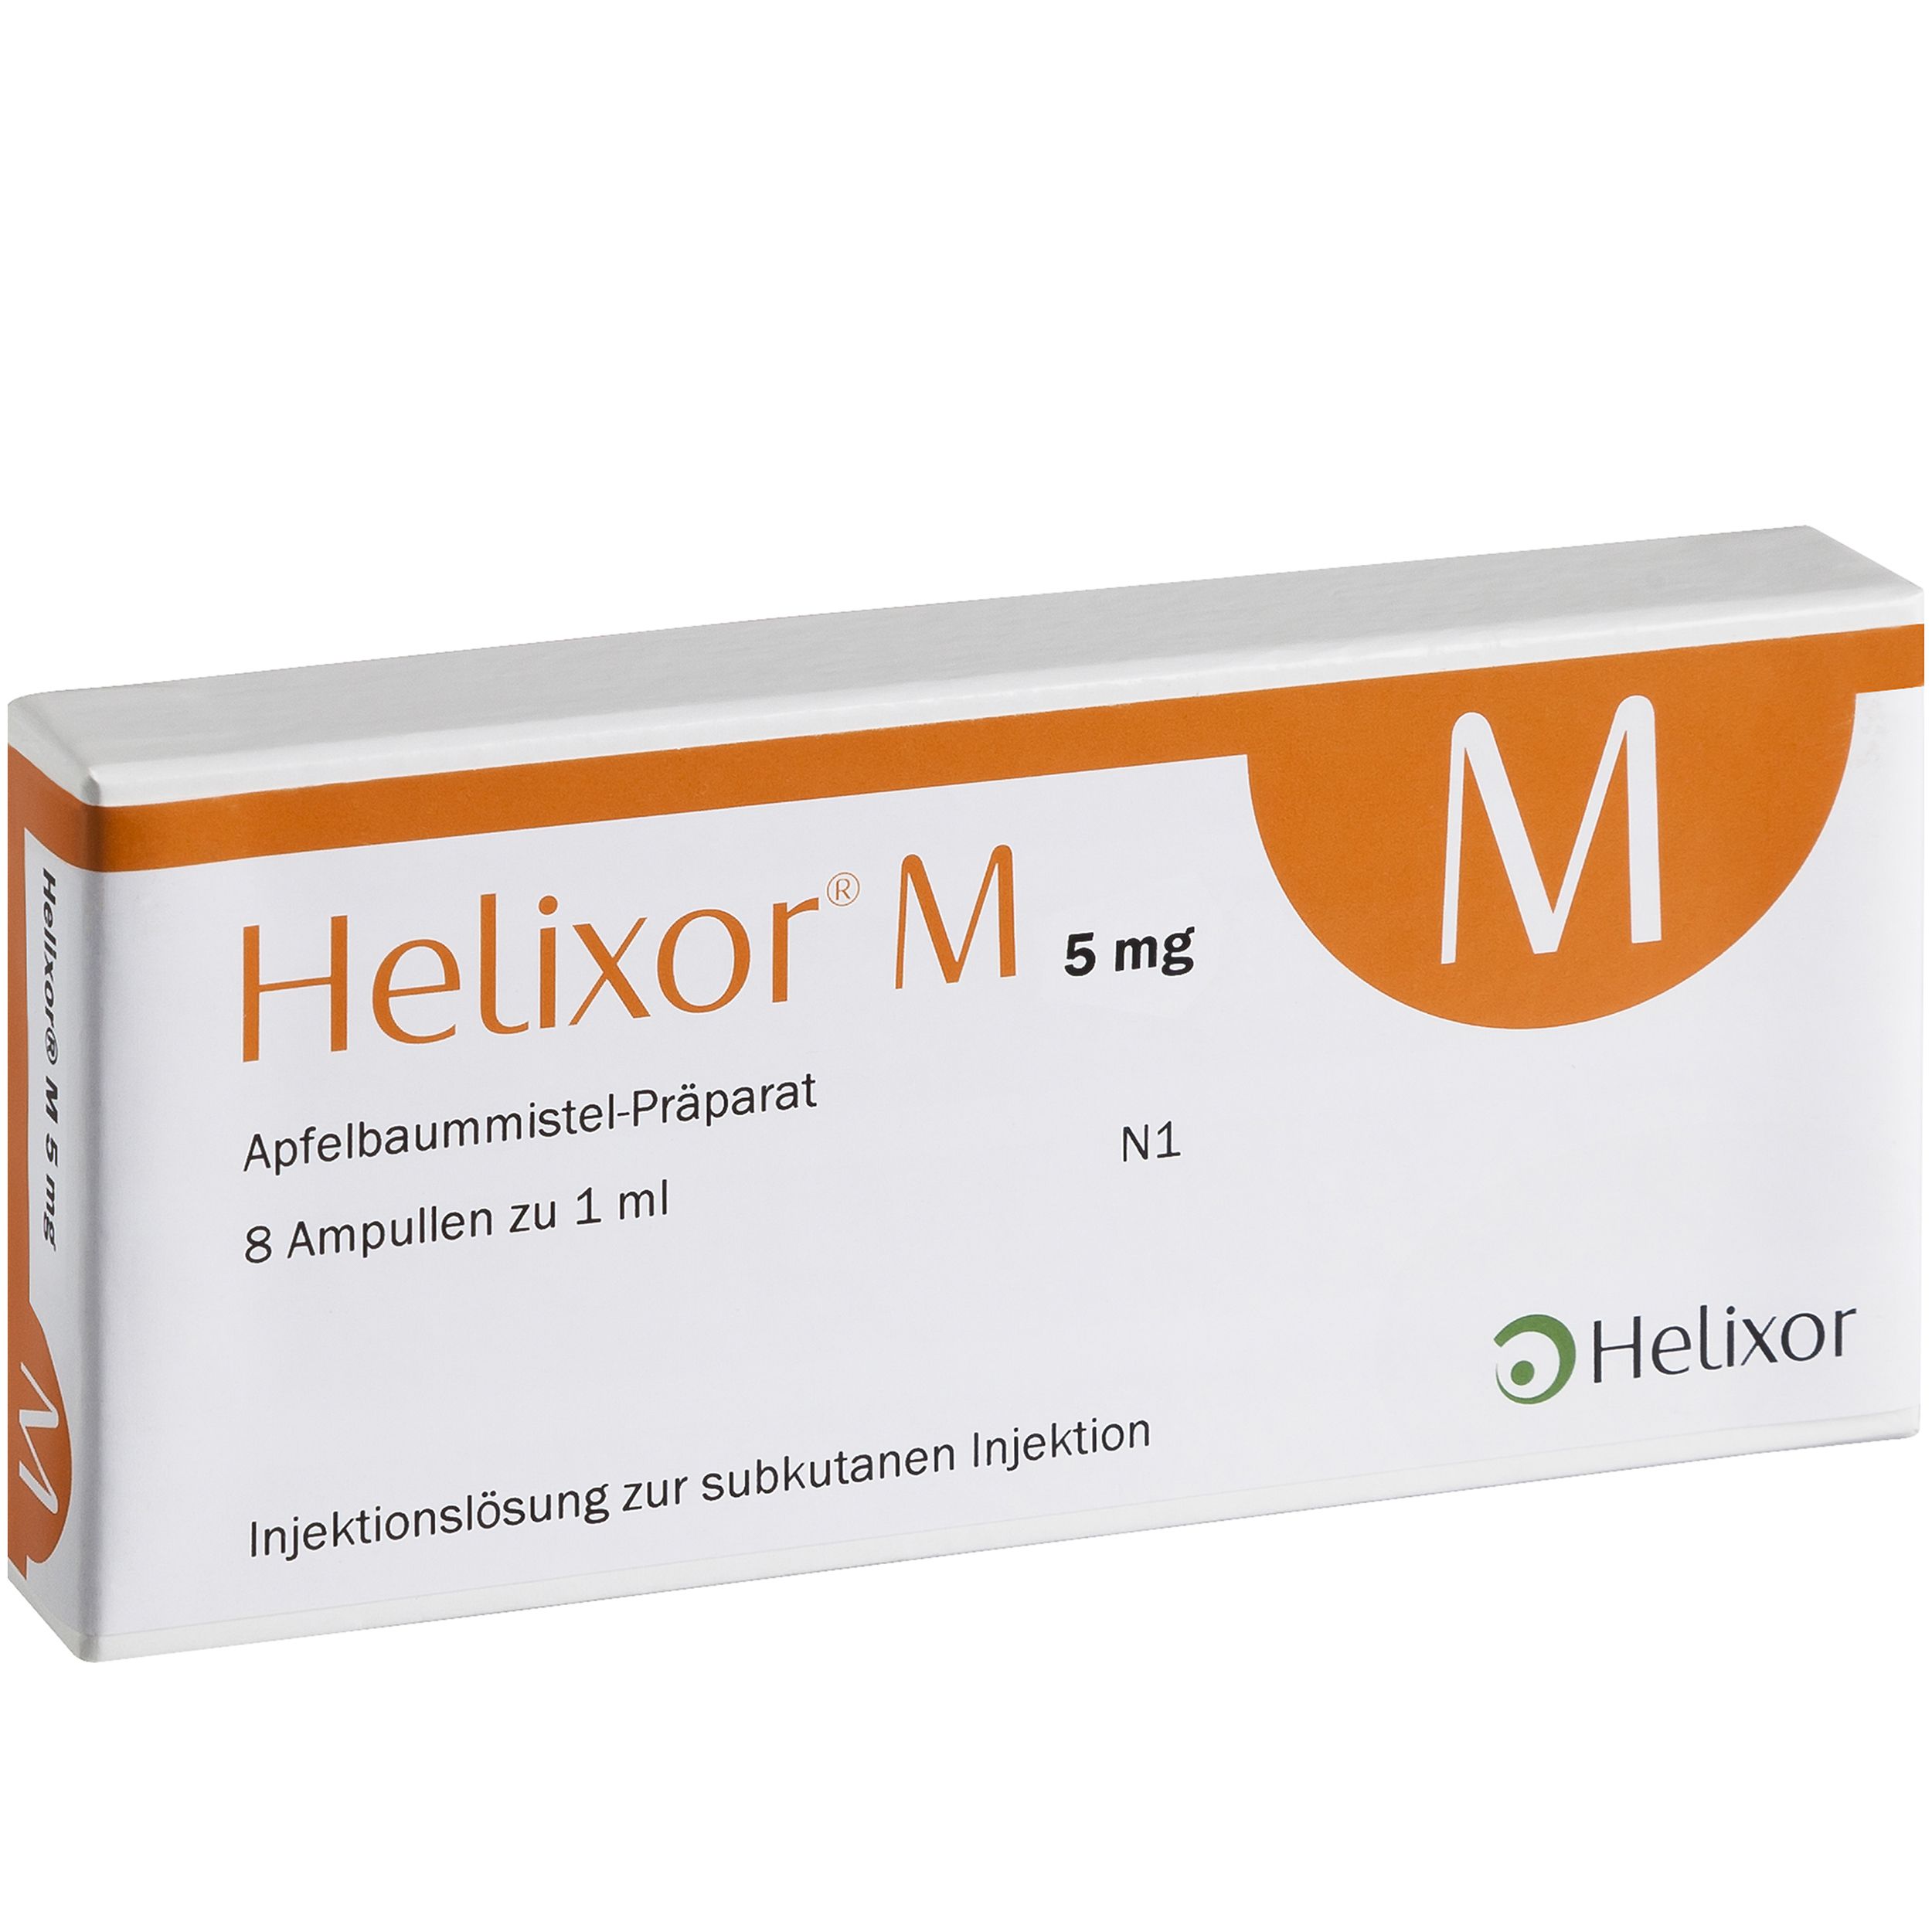 HELIXOR M ampoules 5 mg